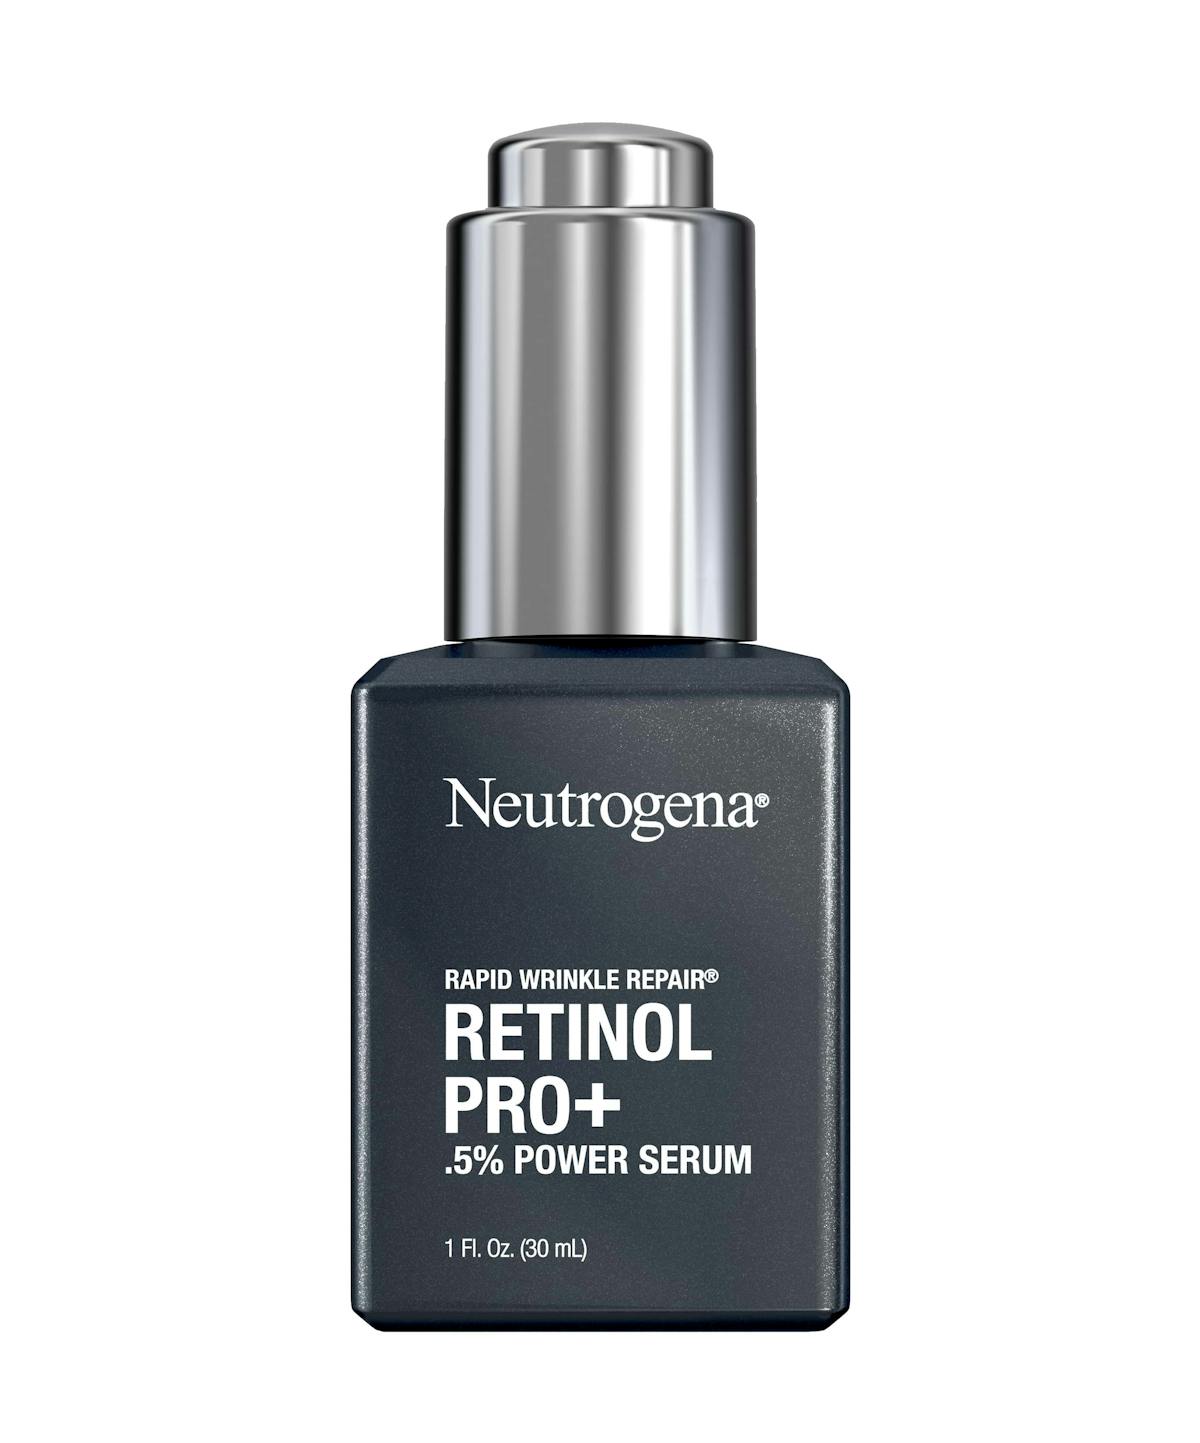 Neutrogena Retinol Serum. Neutrogena Rapid Wrinkle Repair Regenerating Cream. Power serum